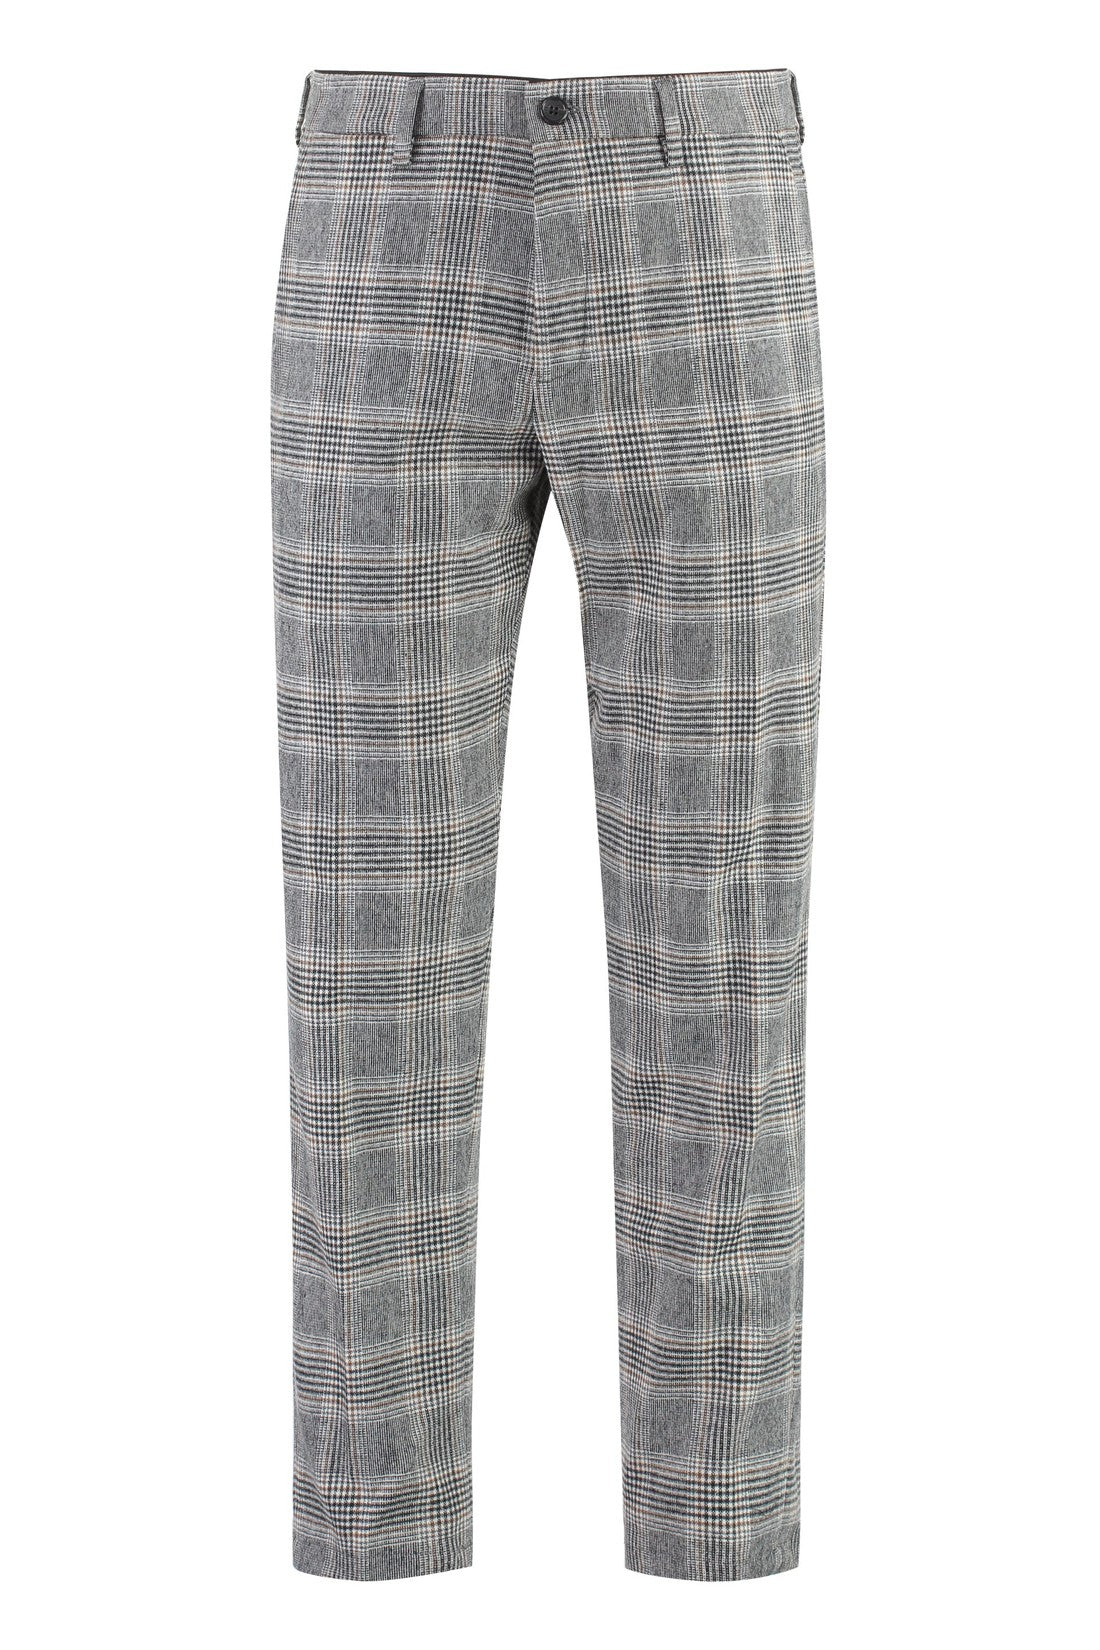 Setter-Chino-pants-in-wool-blend-Department-5-designer-outlet-archivist.jpg